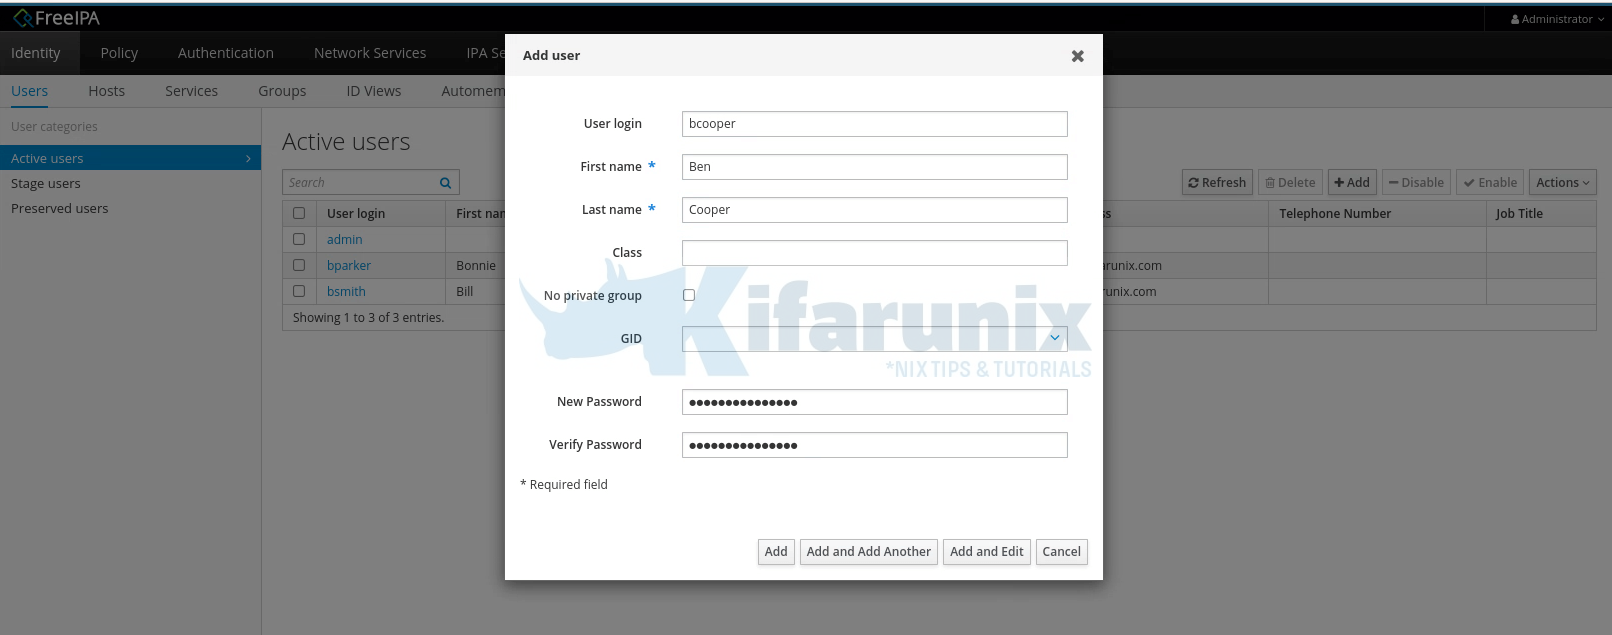 add users web interface freeipa